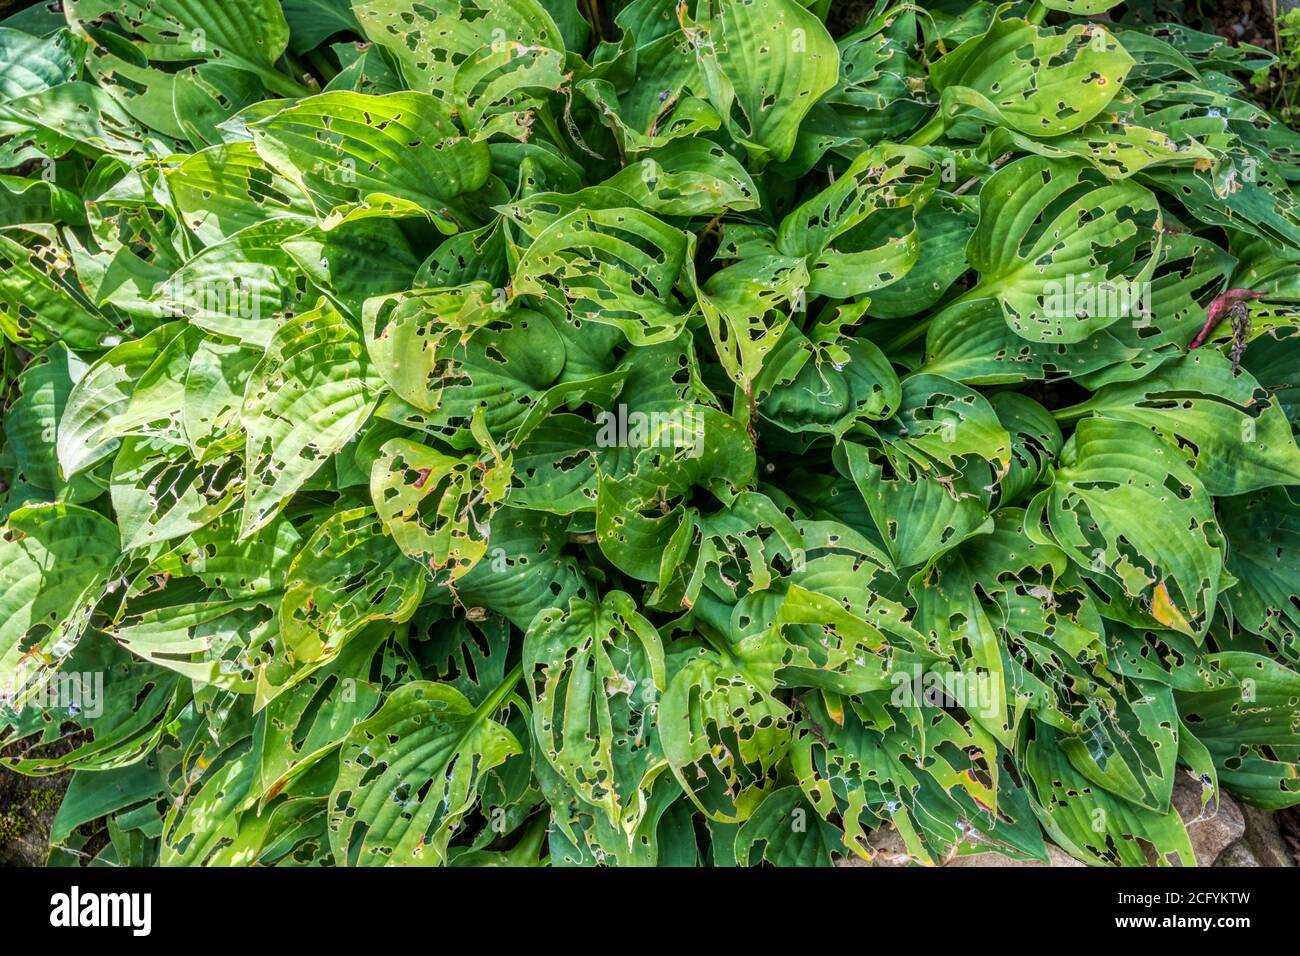 Leaves of a hosta plant eaten by garden slugs. Stock Photo